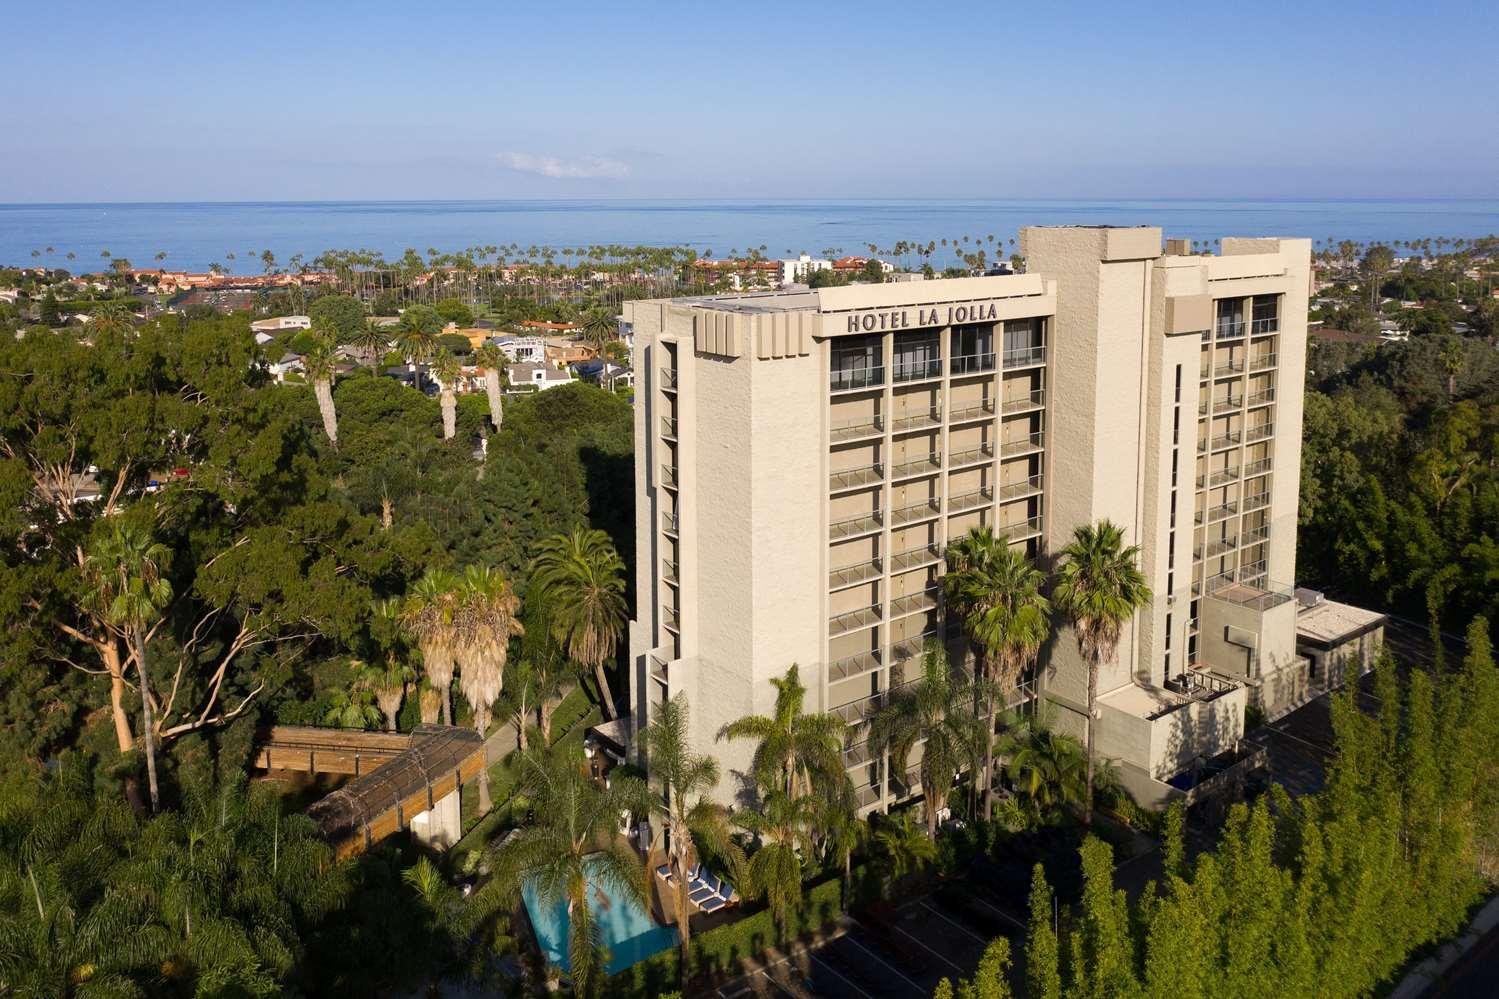 Hotel La Jolla, Curio Collection by Hilton in La Jolla, CA